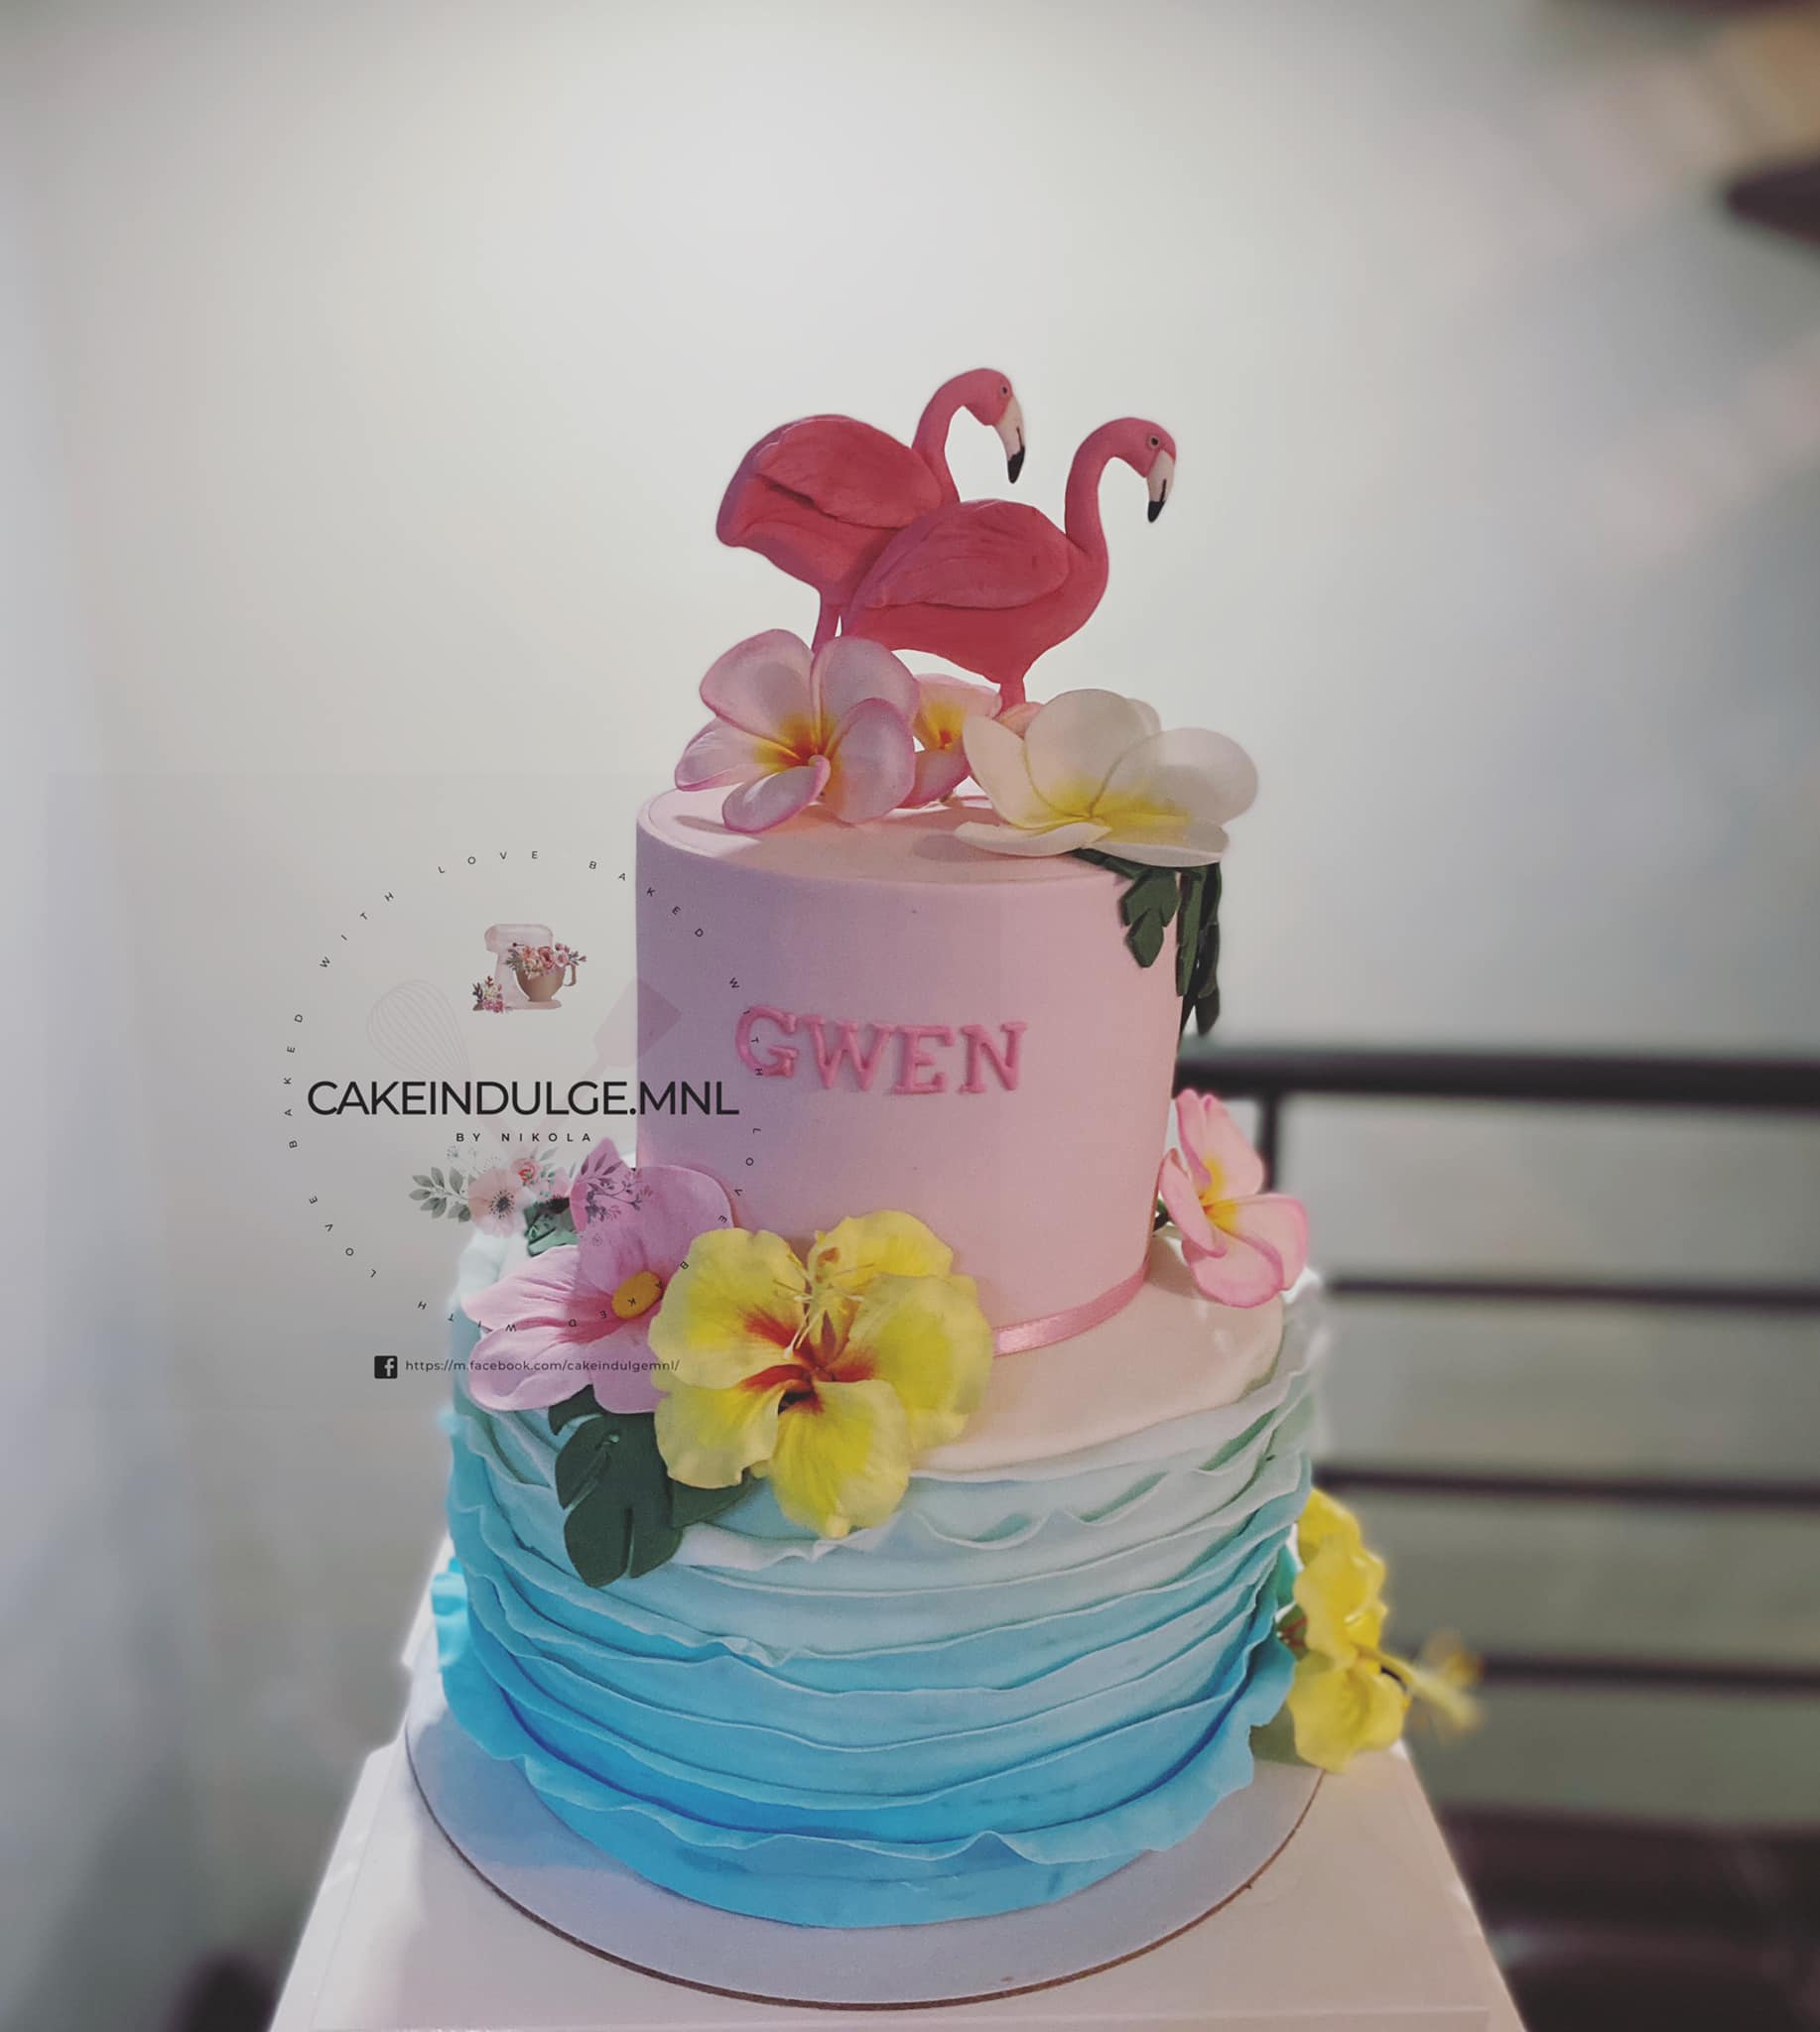 Recreatead our flamingo cake design for 2 month birthday celebrations.  #themecake #themecakes #designercakes #macarons #egglessmacarons… |  Instagram